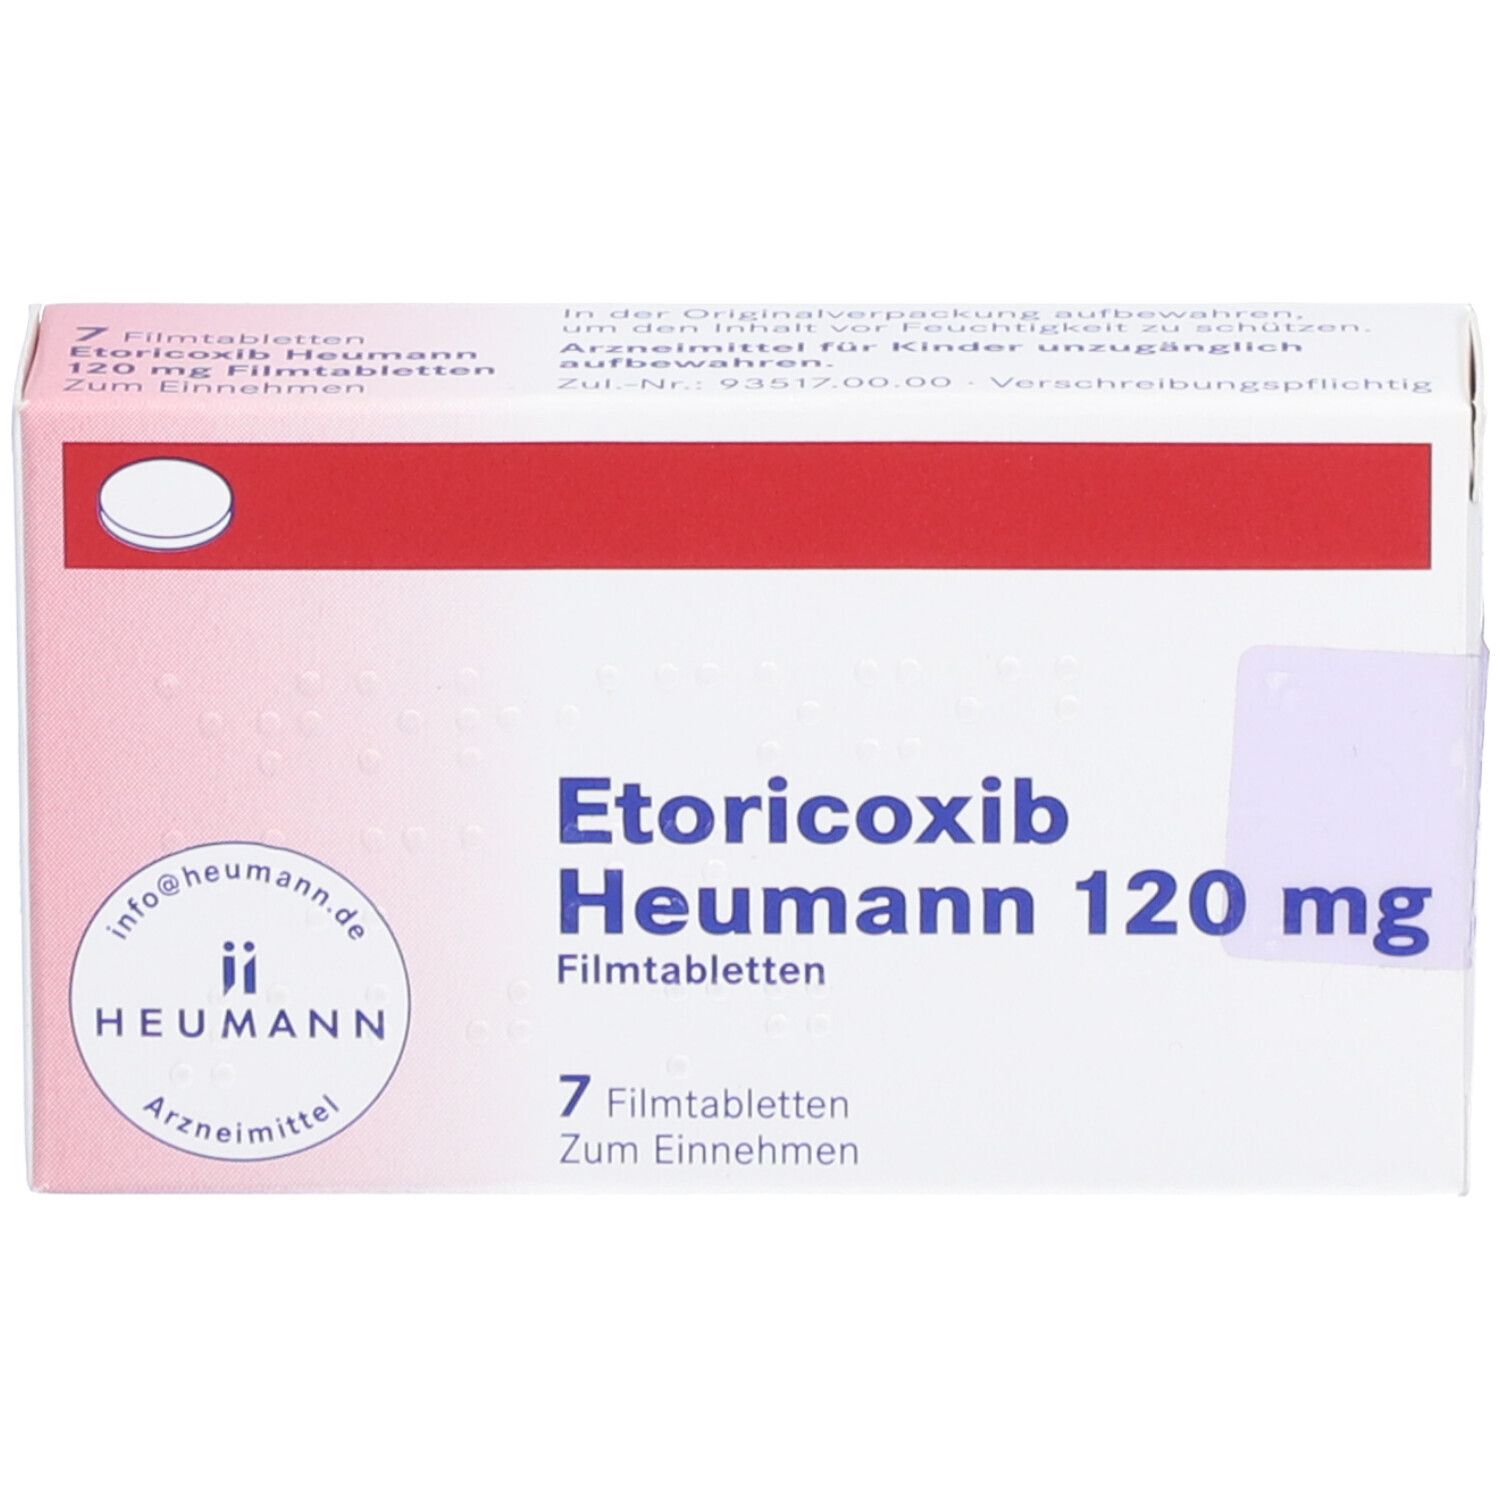 Etoricoxib Heumann 120 mg